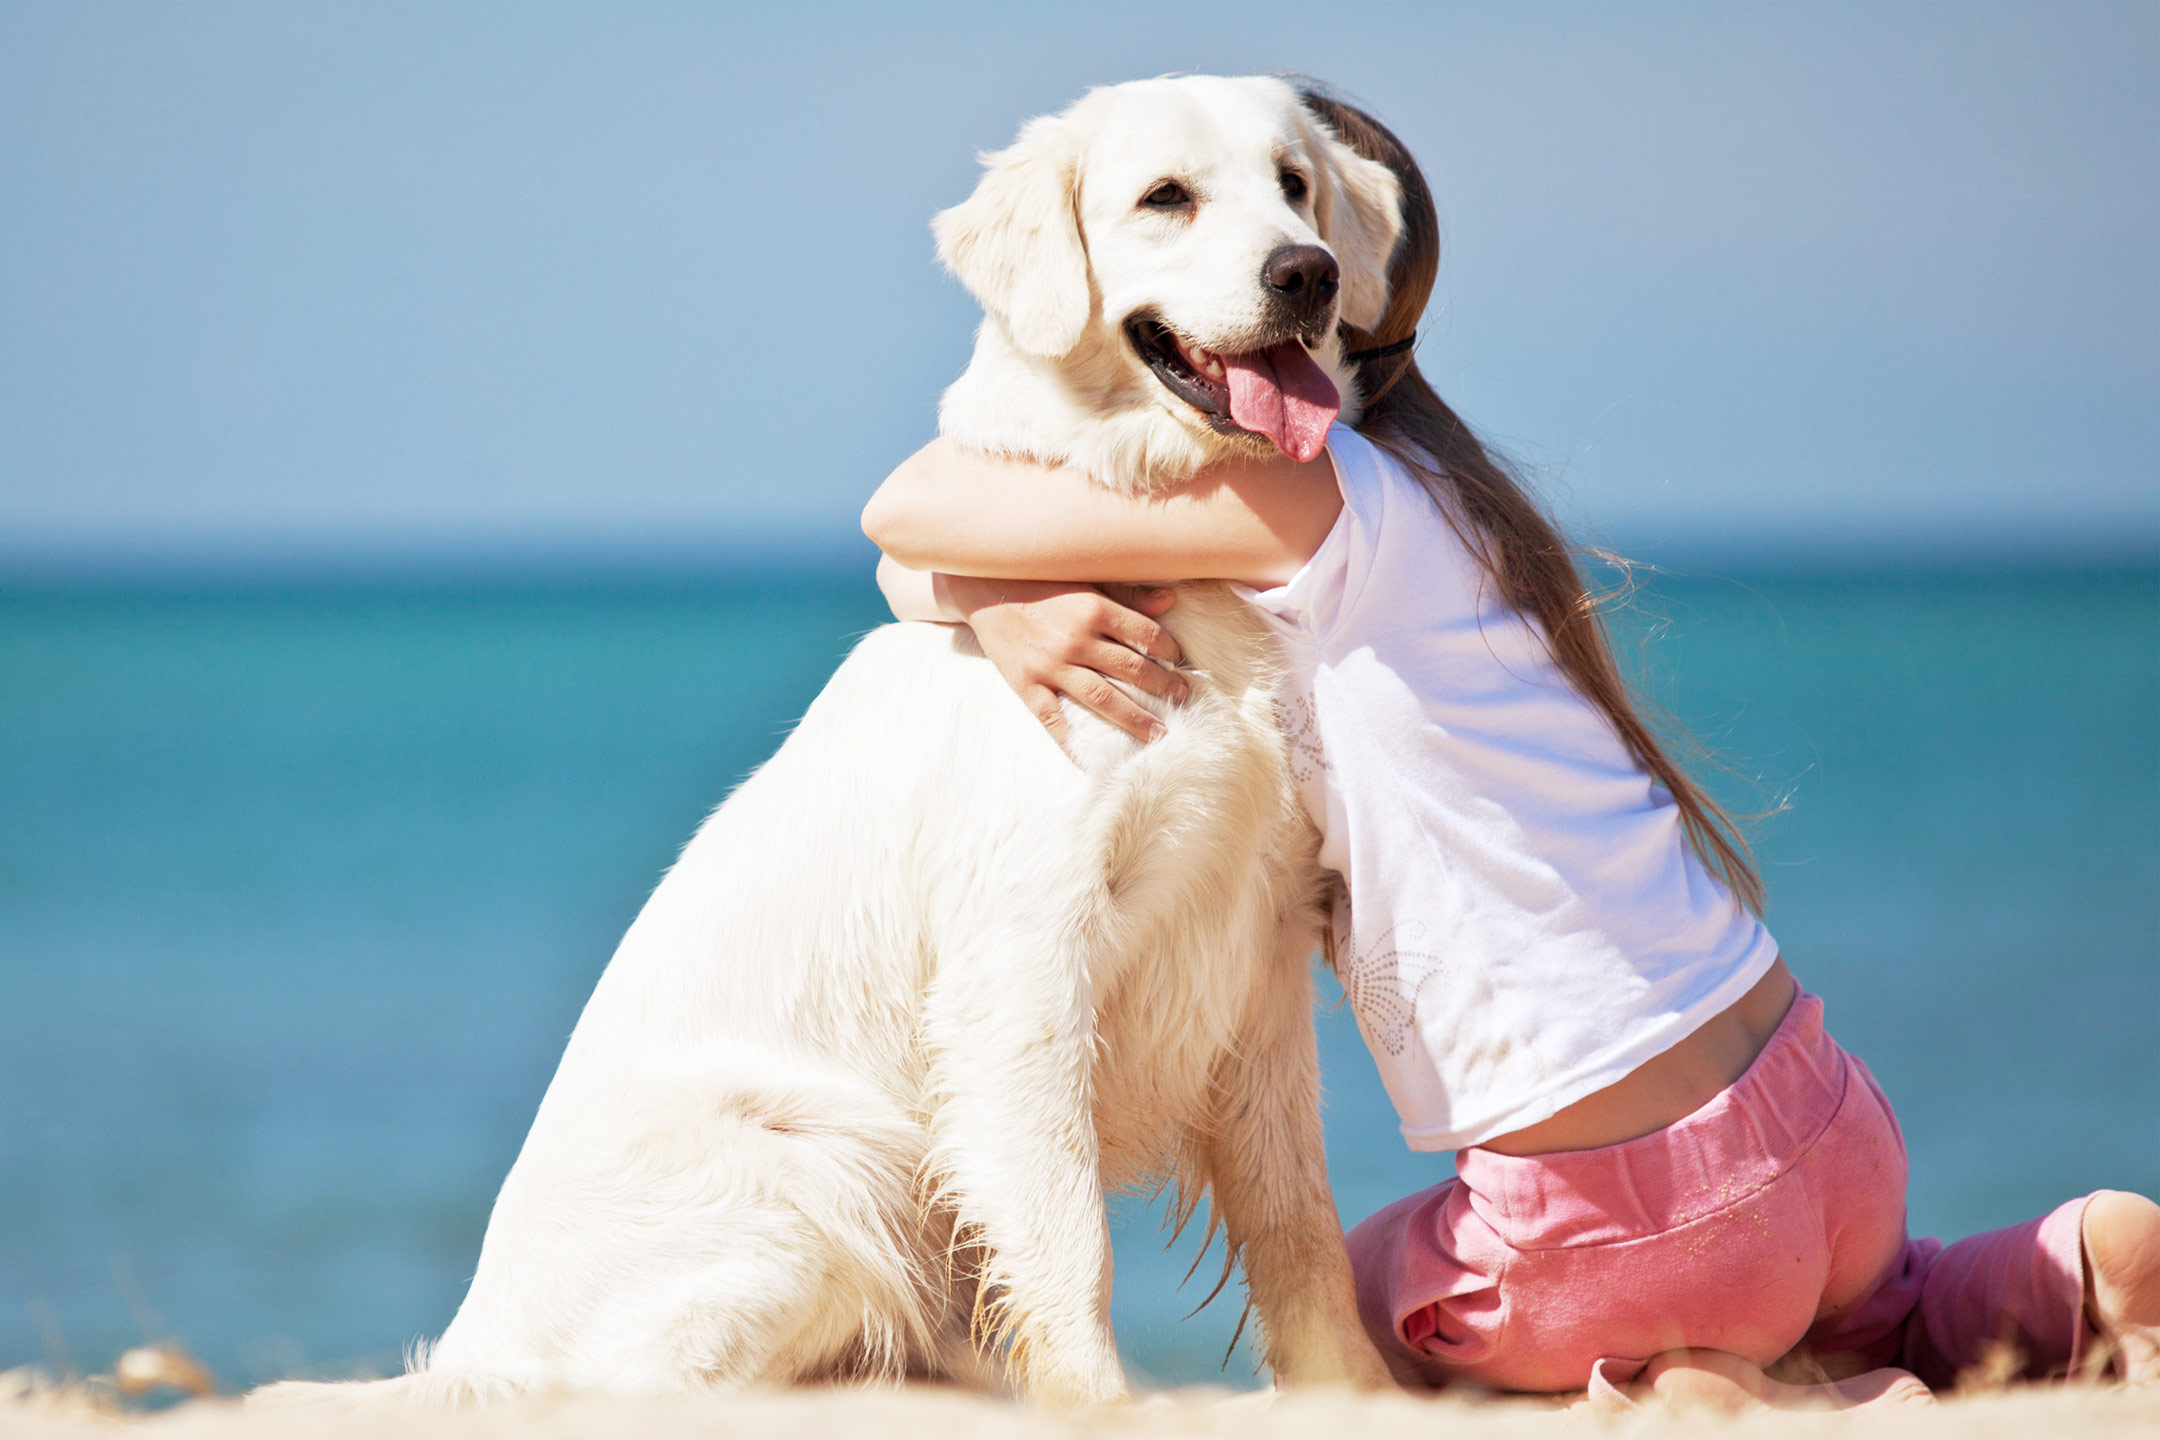 girl-hugging-dog-on-beach2160